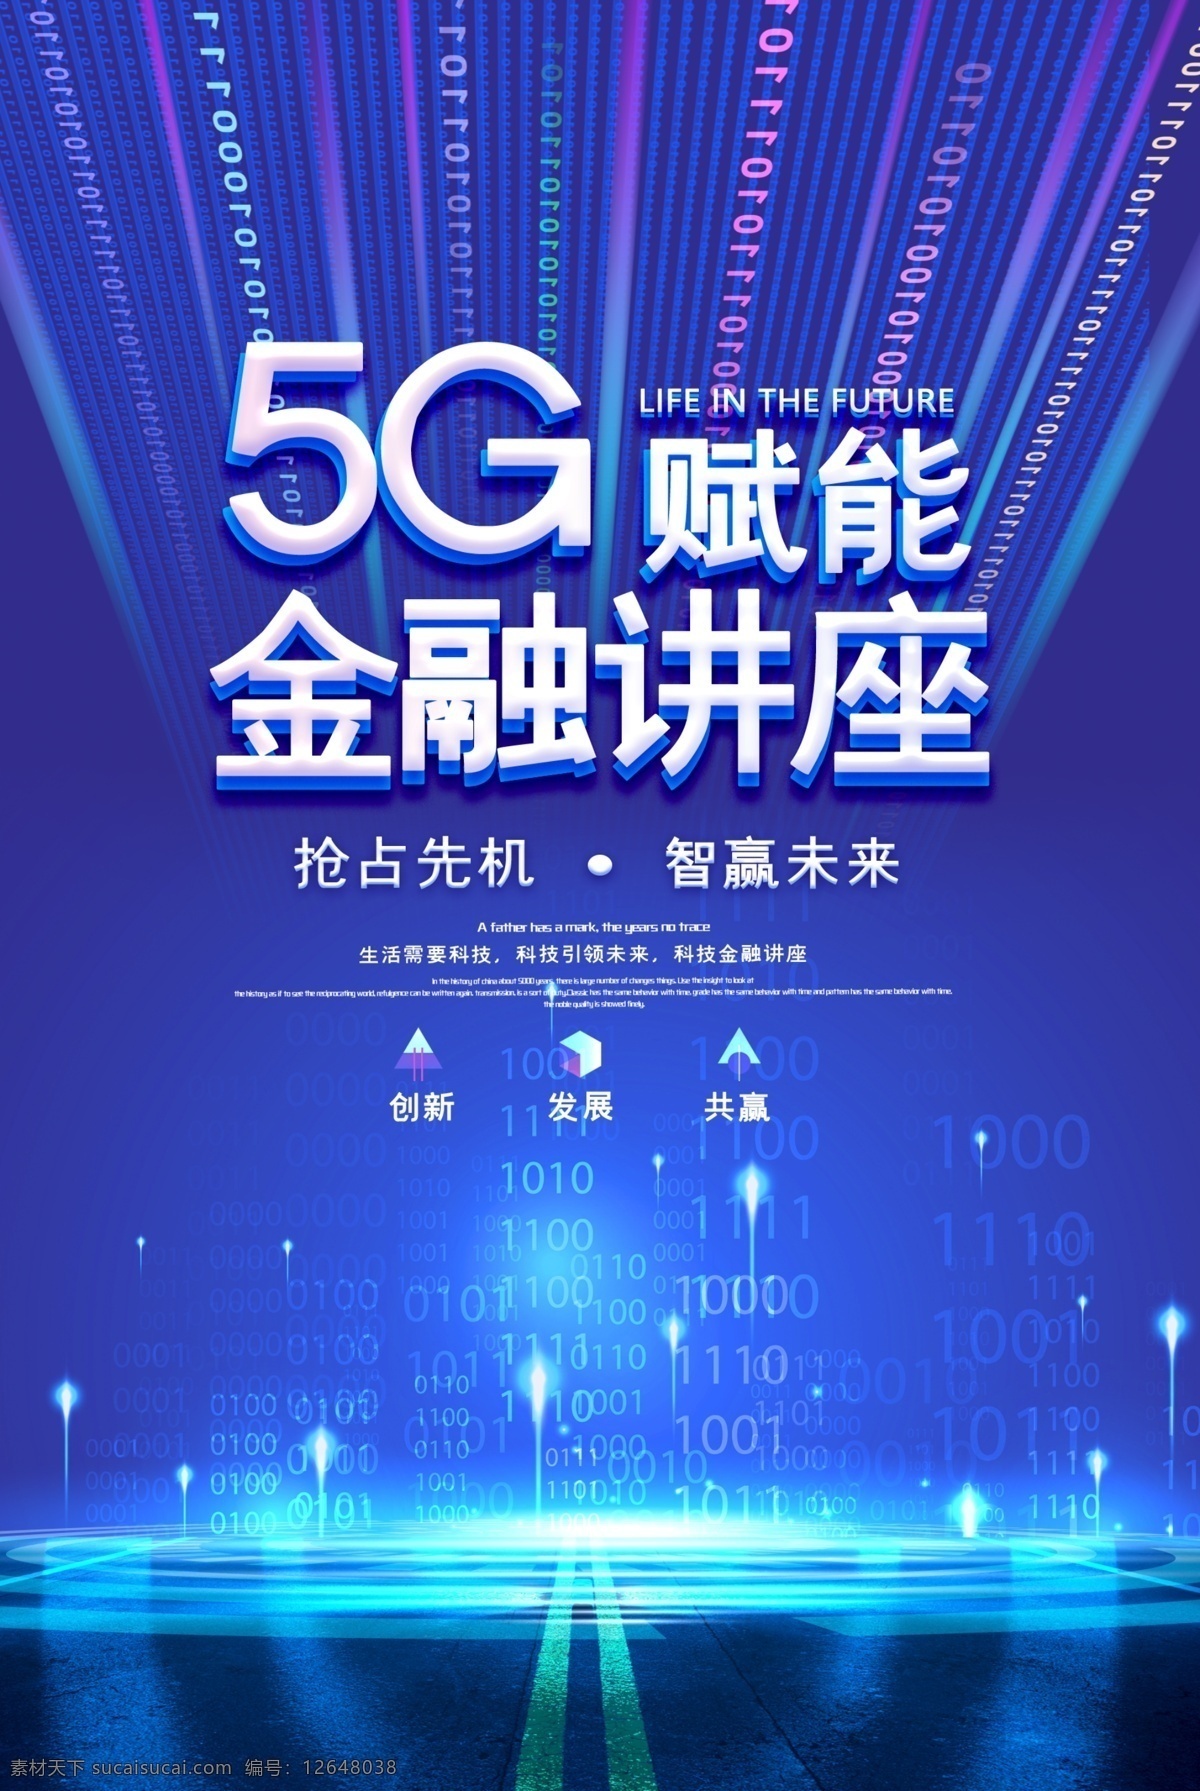 5g 智能 生活 5g智能生活 科技背景 5g新时代 5g网络 城市引擎